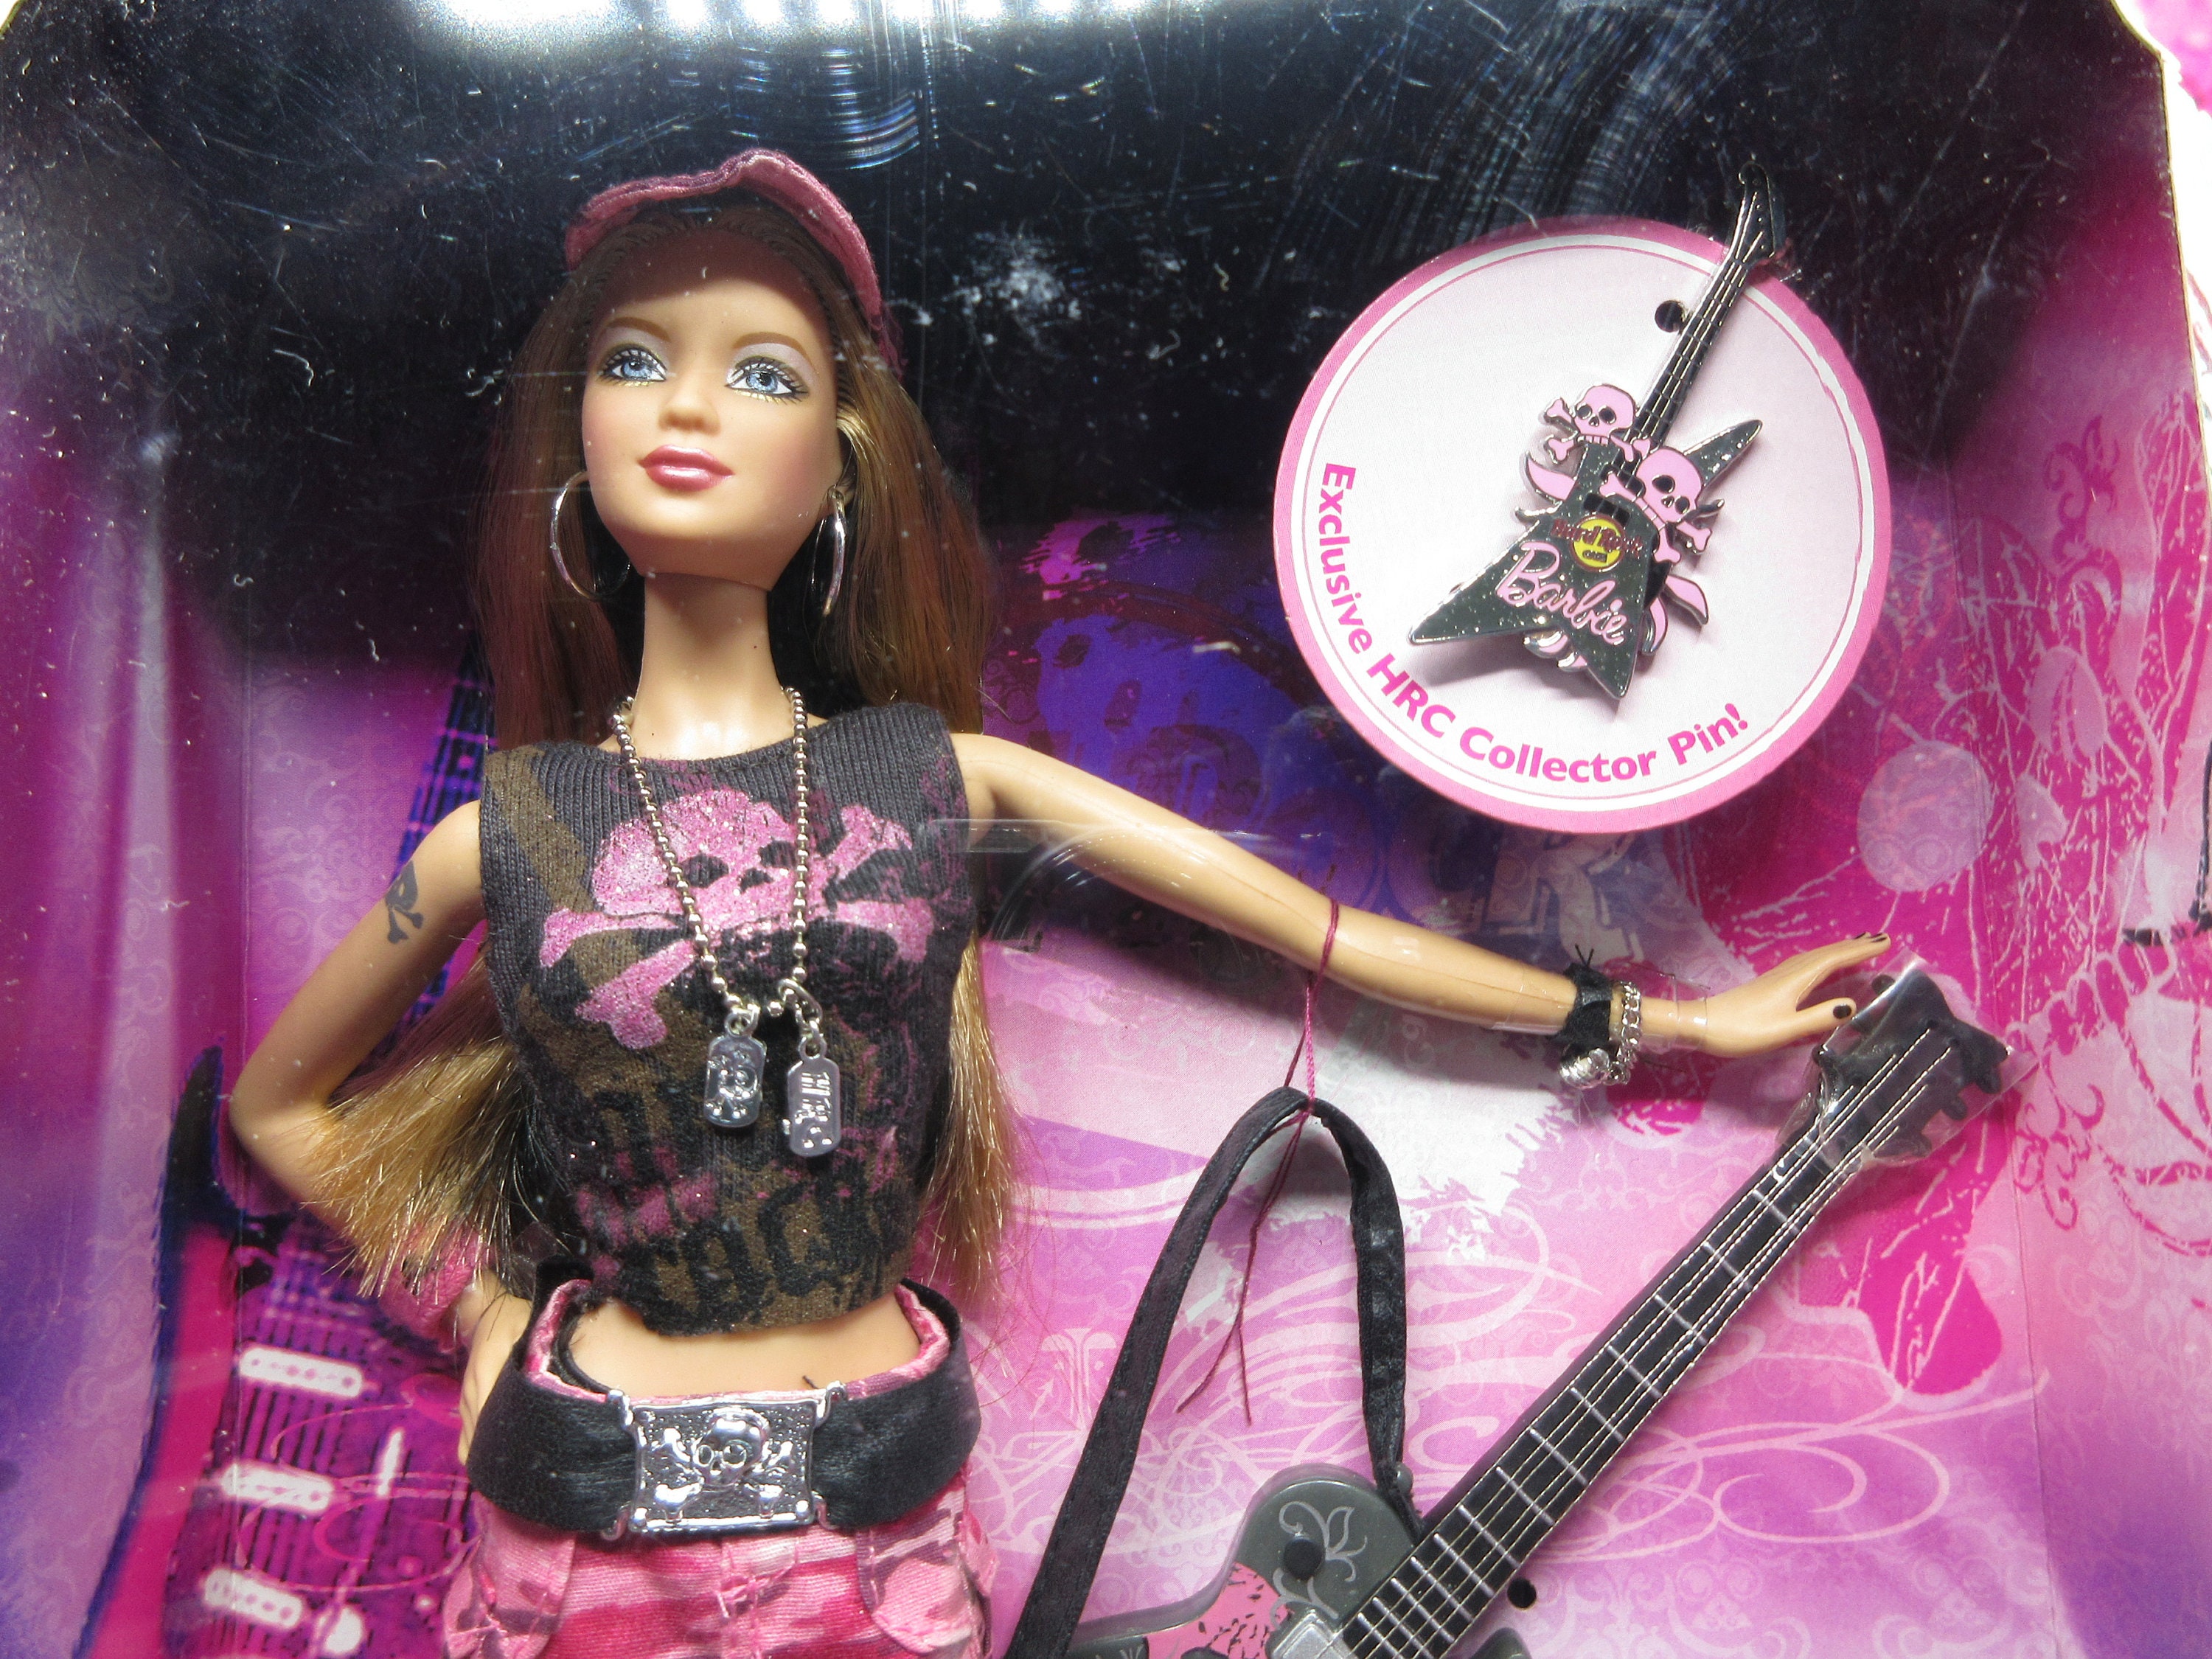 zuur Impressionisme Hechting Barbie Hard Rock Barbie NRFB Pink Label Barbie Doll - Etsy